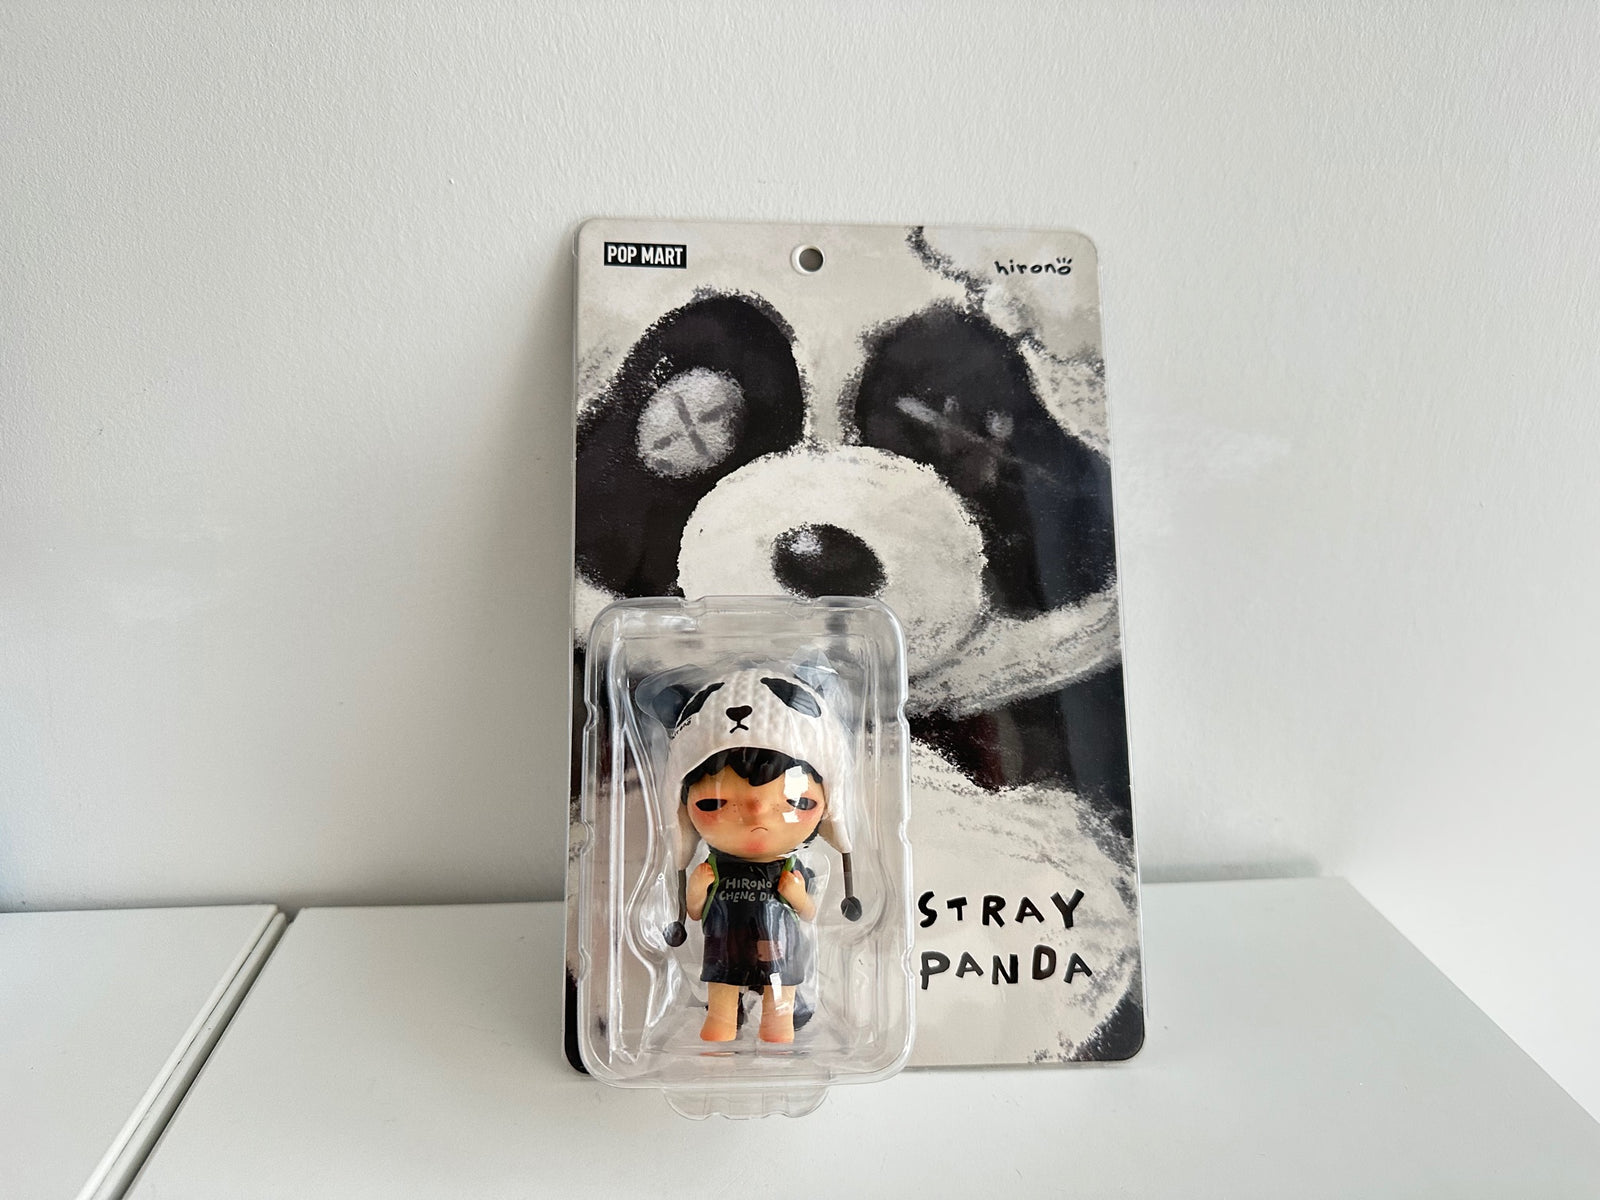 Hirono Stray Panda (CHENG DU LIMITED) by POP MART  - 1